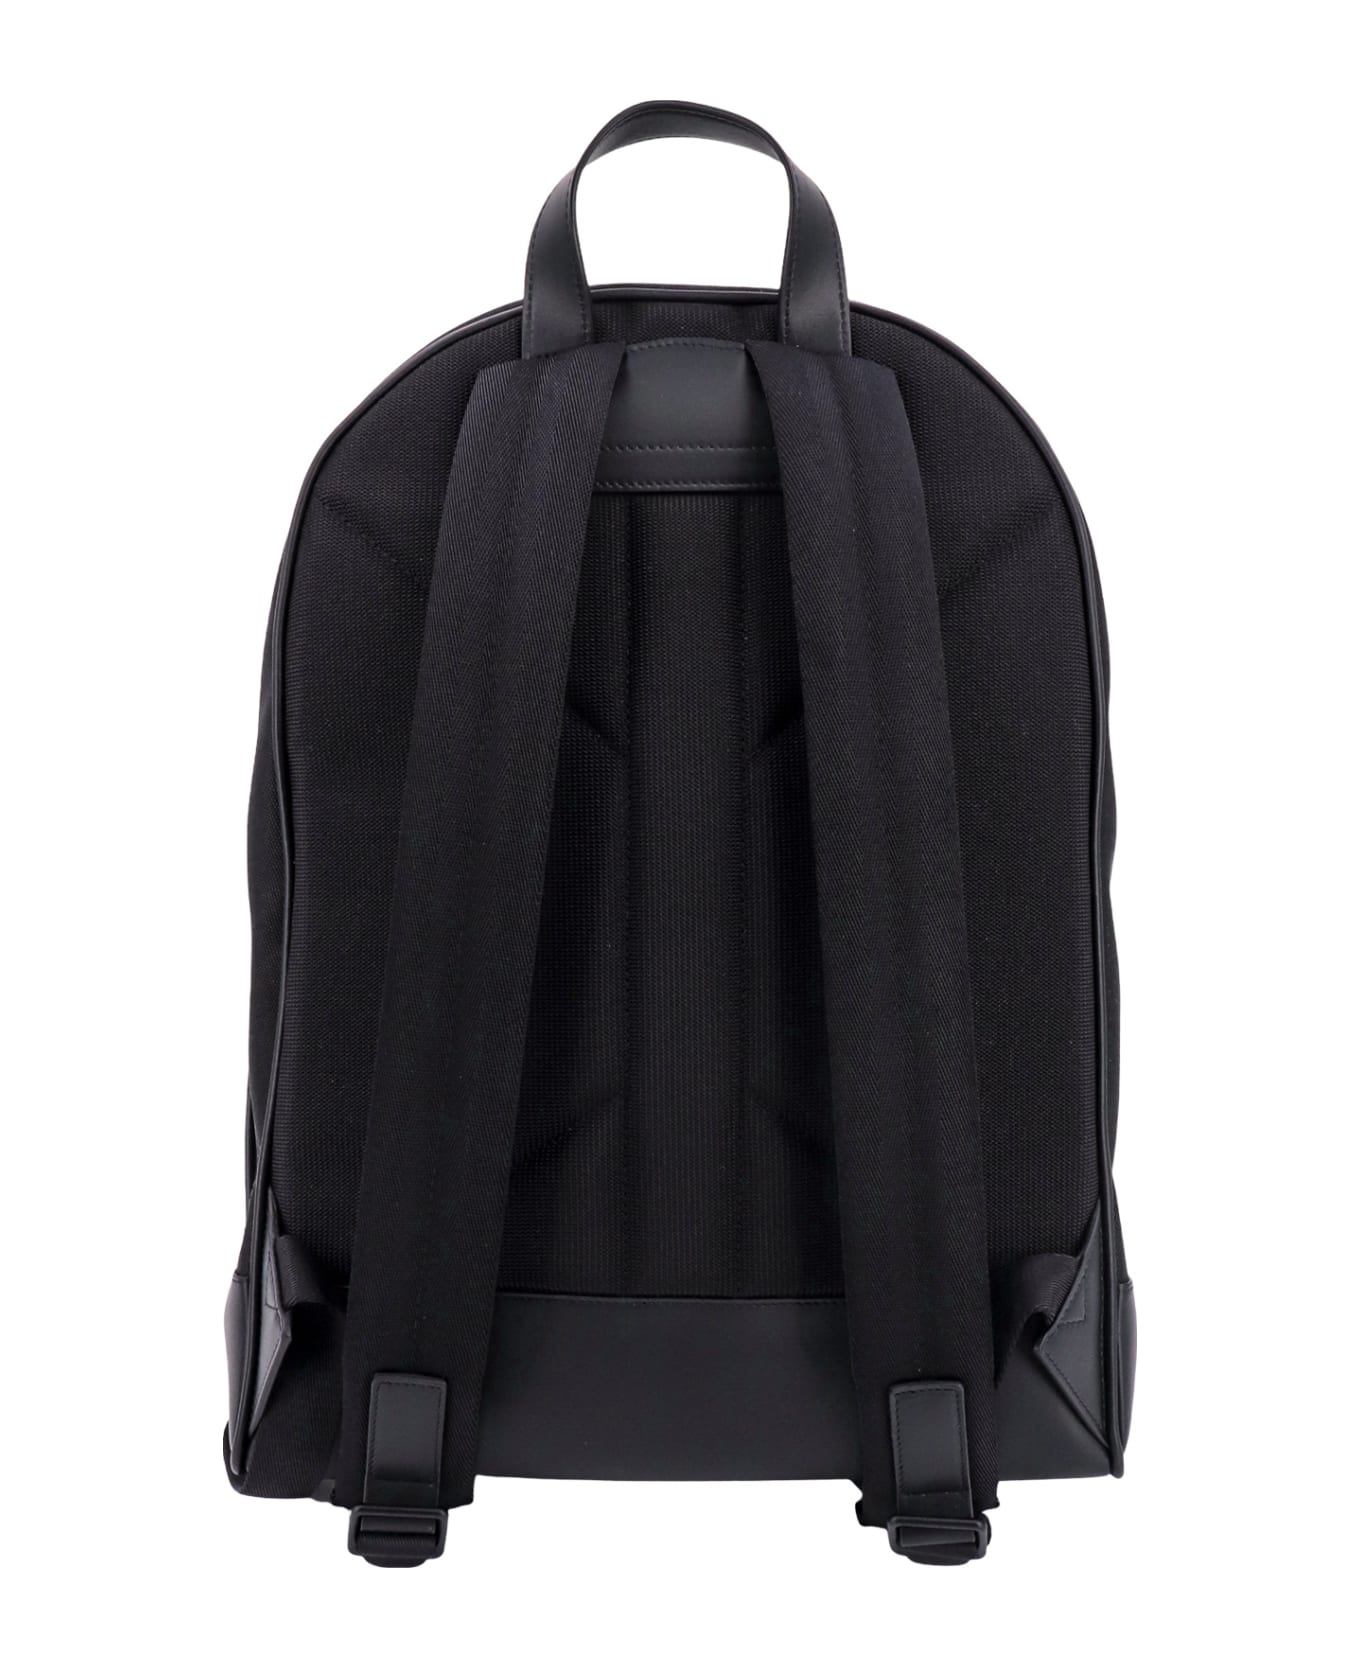 Burberry Backpack - Black